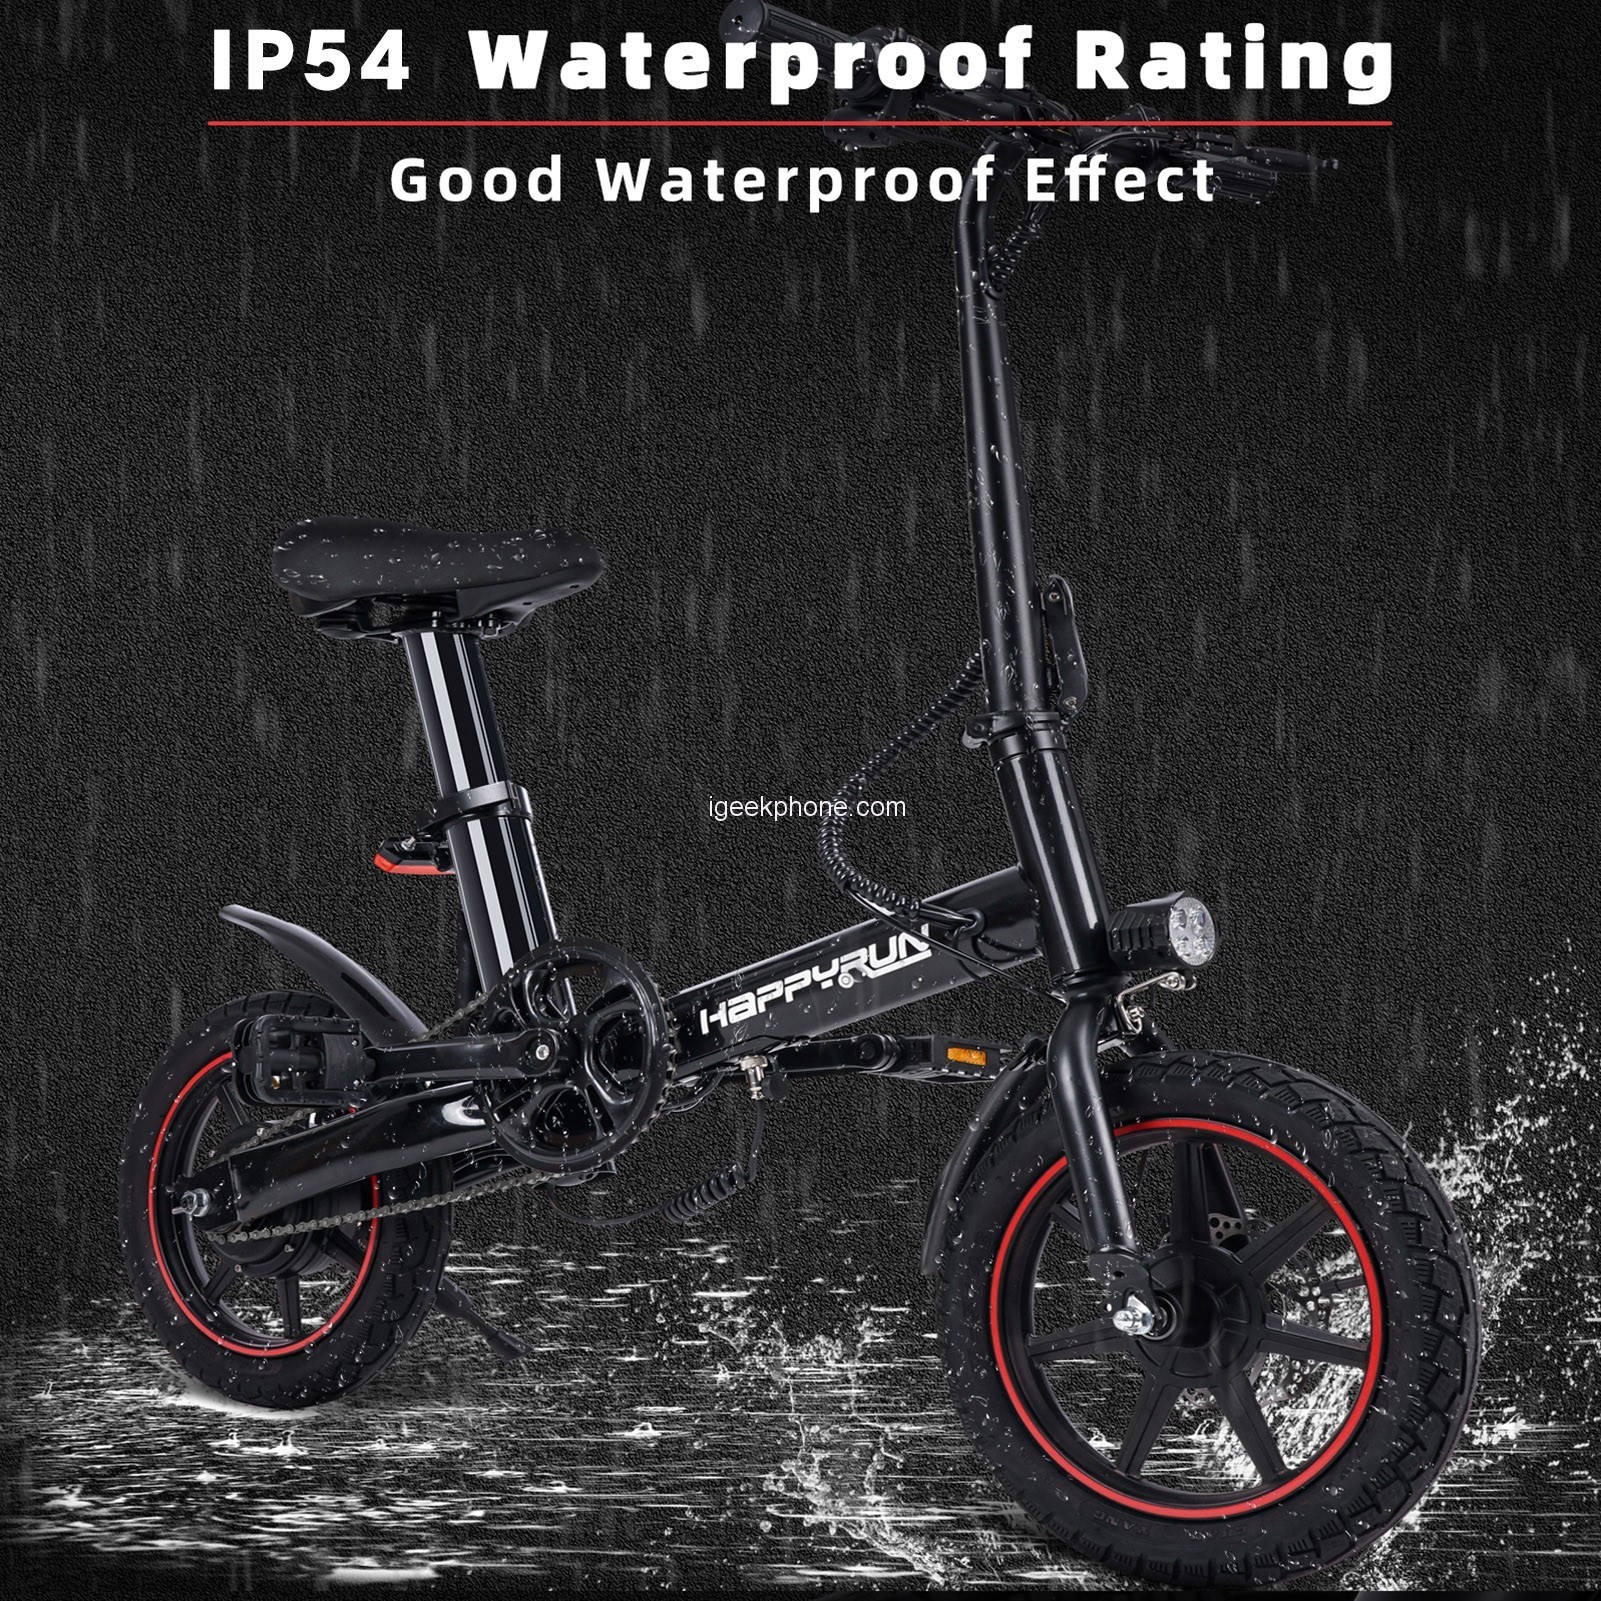 Happyrun HR-X40 Waterproof